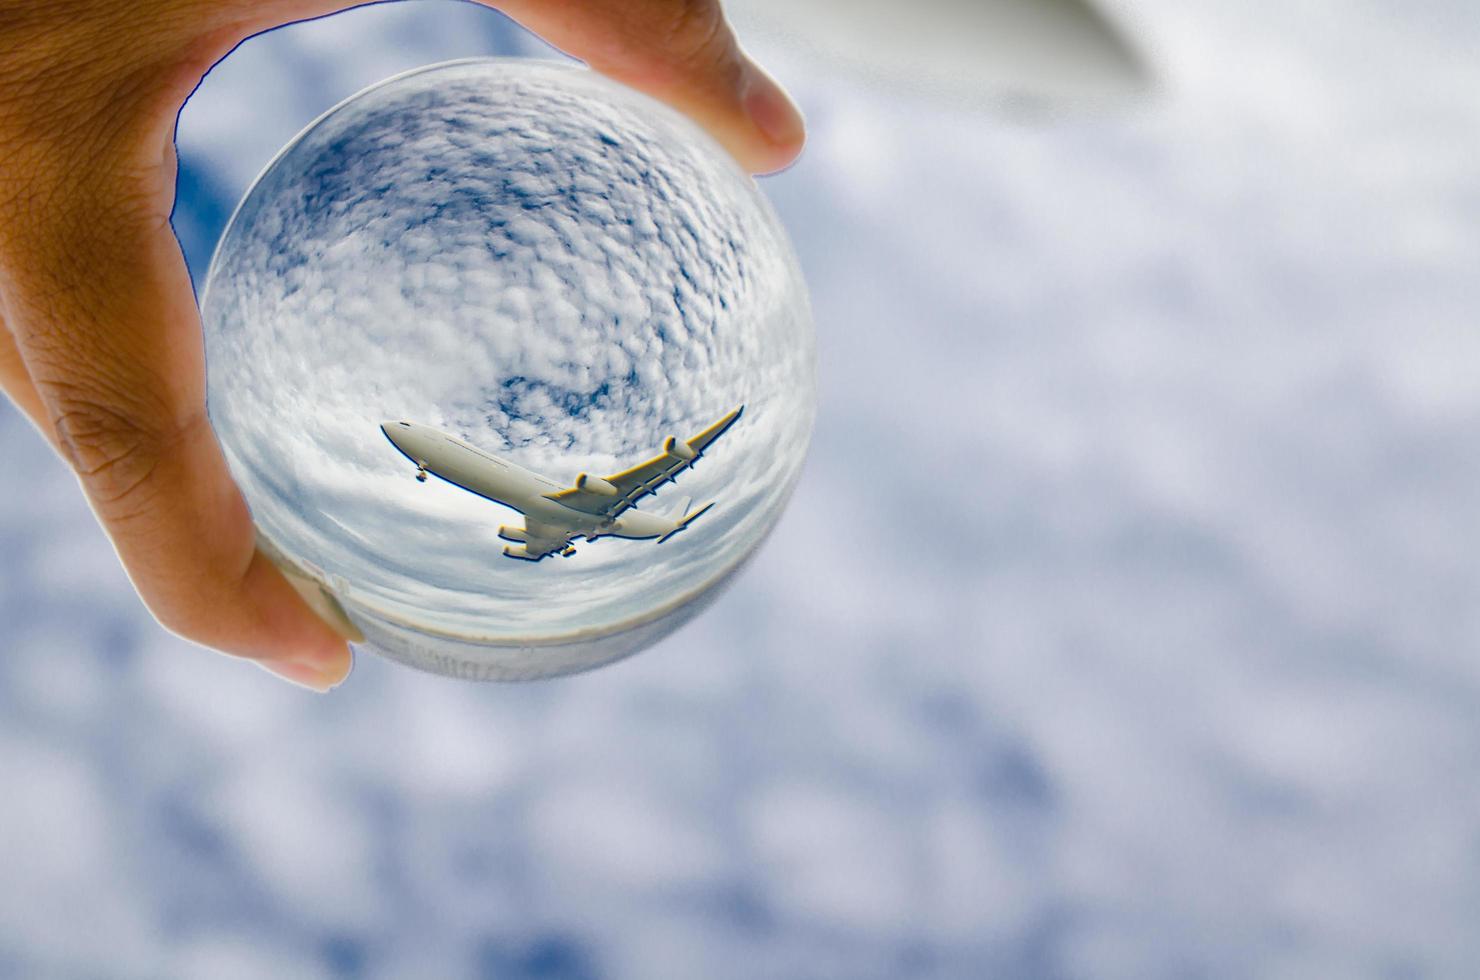 vliegtuig vliegend Aan bewolkt lucht fotografie in glas bal. foto